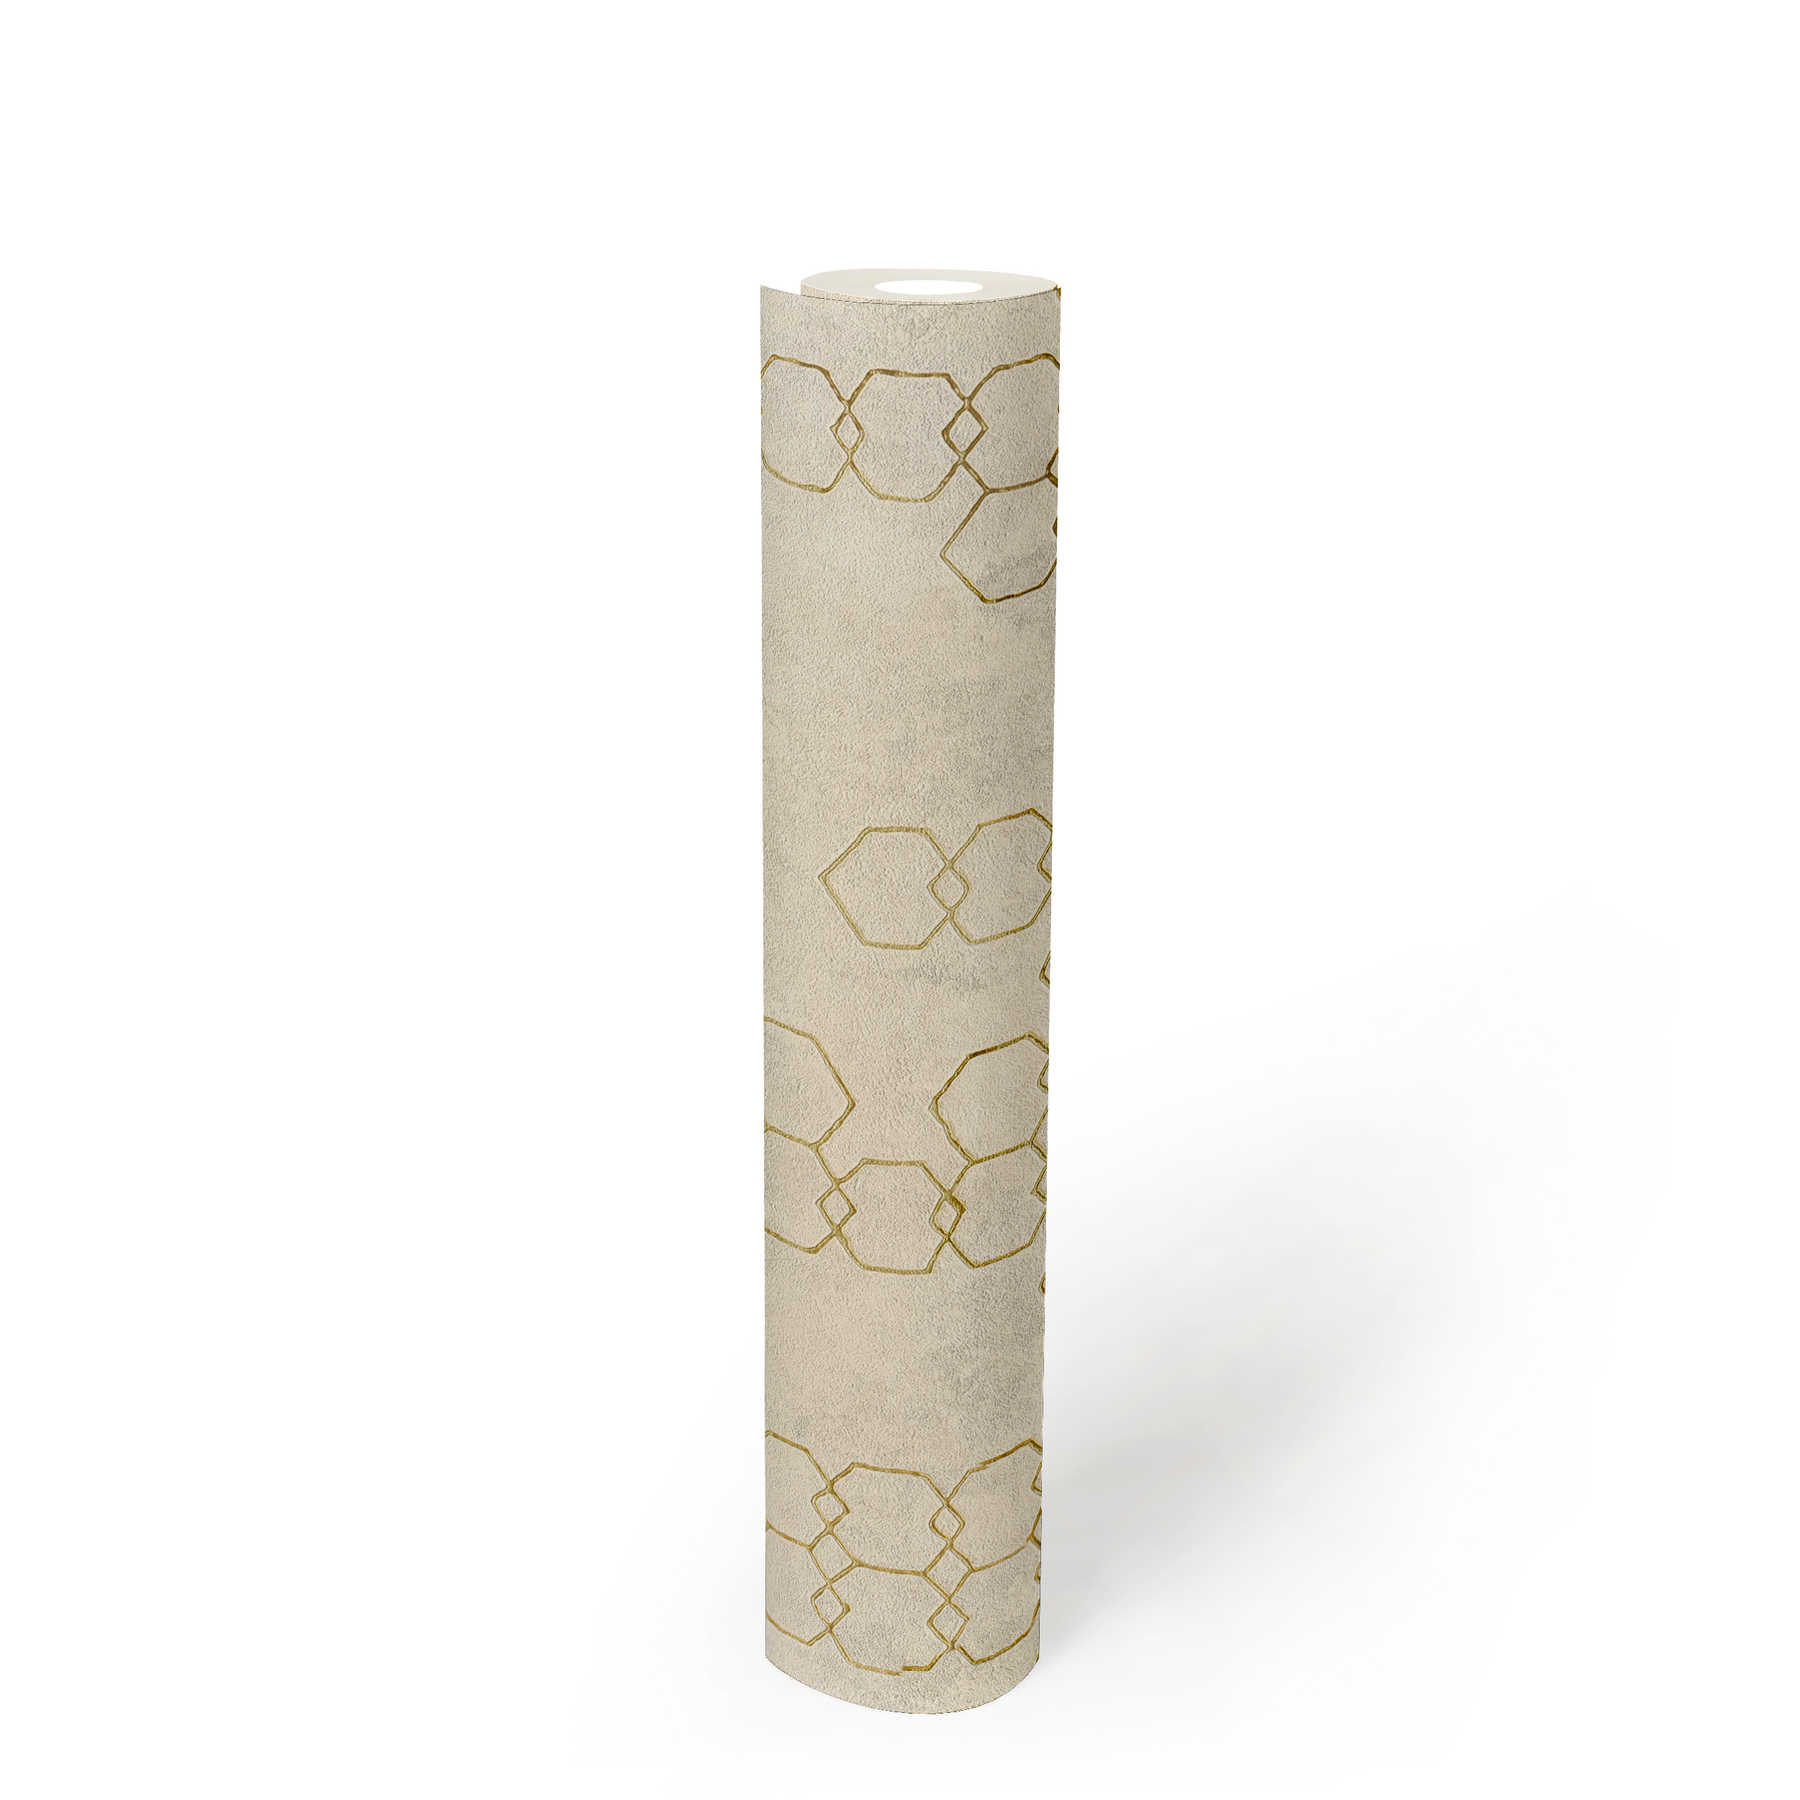             Geometric pattern wallpaper in industrial style - cream, gold, grey
        